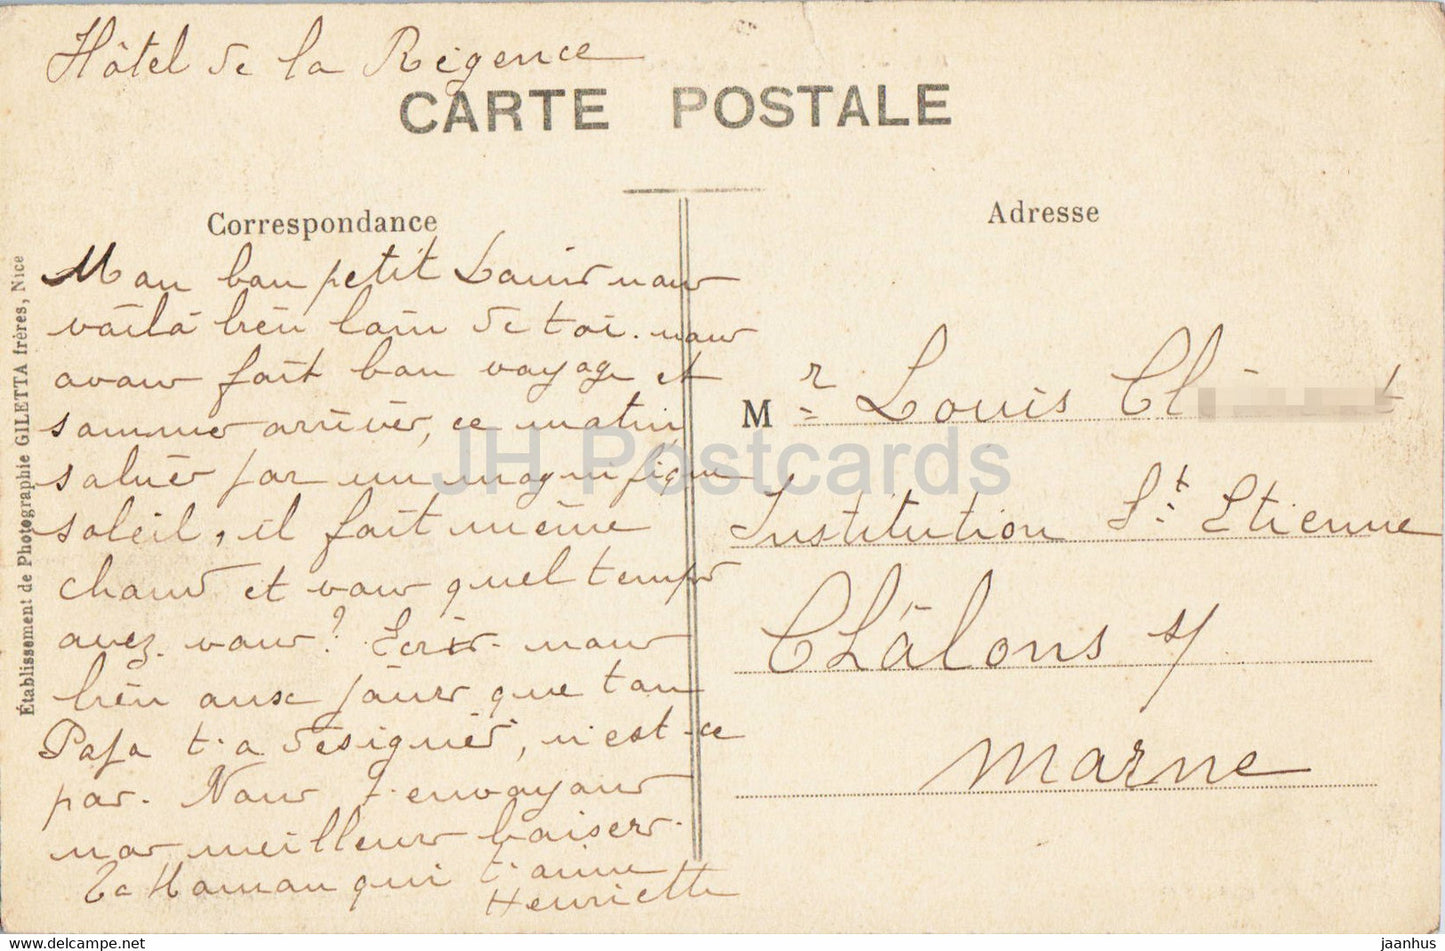 Nice - Le Jardin Public - 82 - carte postale ancienne - France - occasion